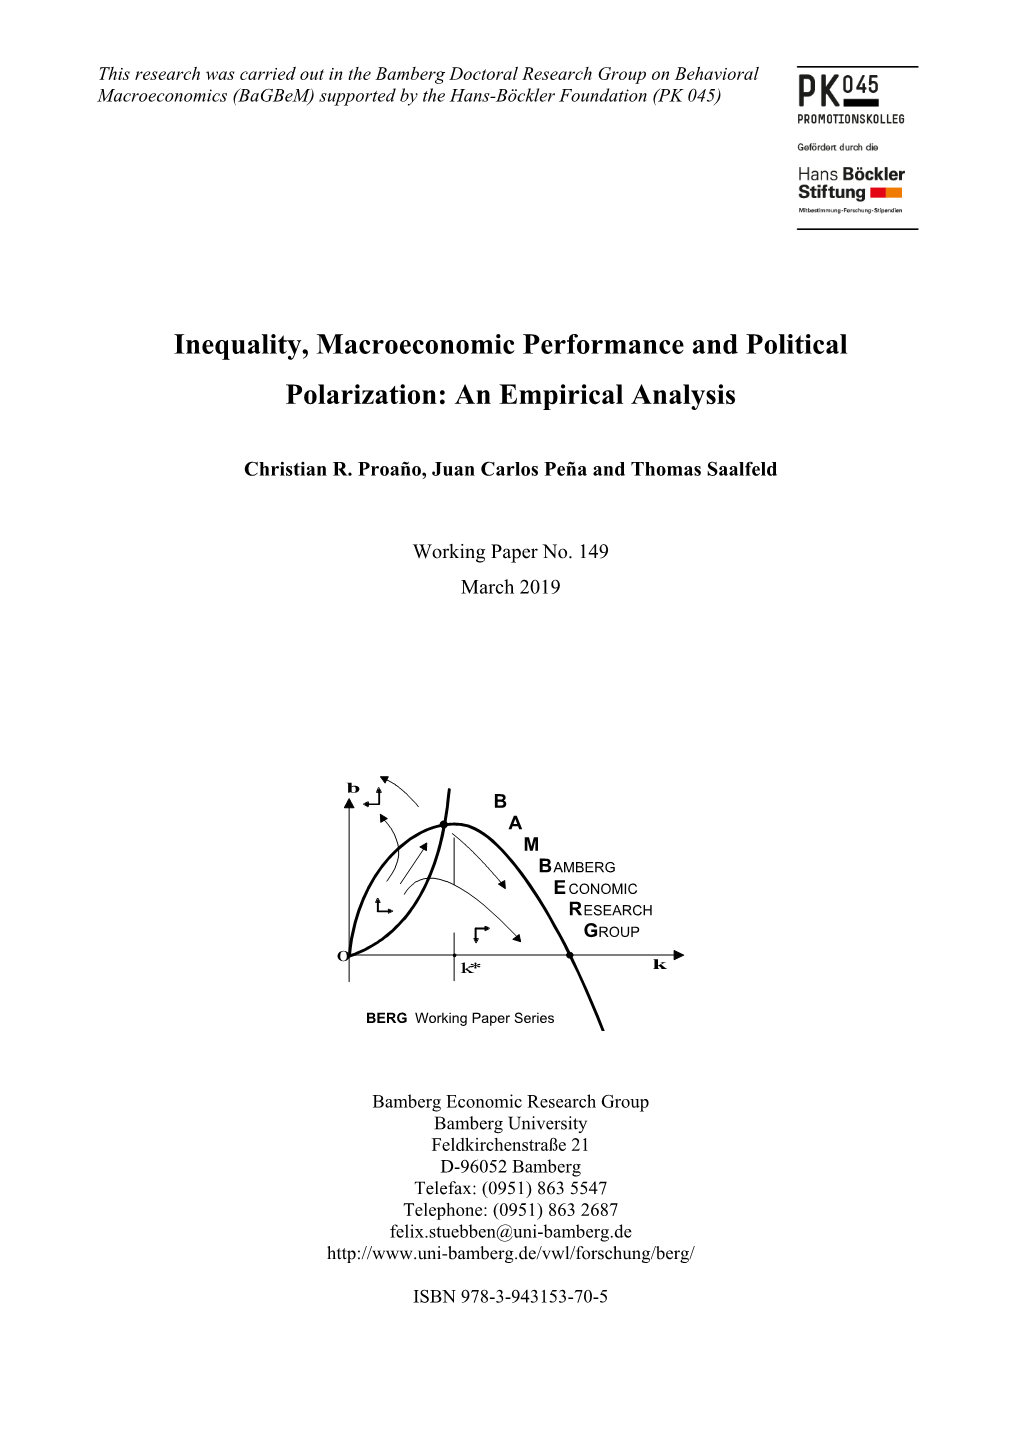 Inequality, Macroeconomic Performance and Political Polarization: an Empirical Analysis